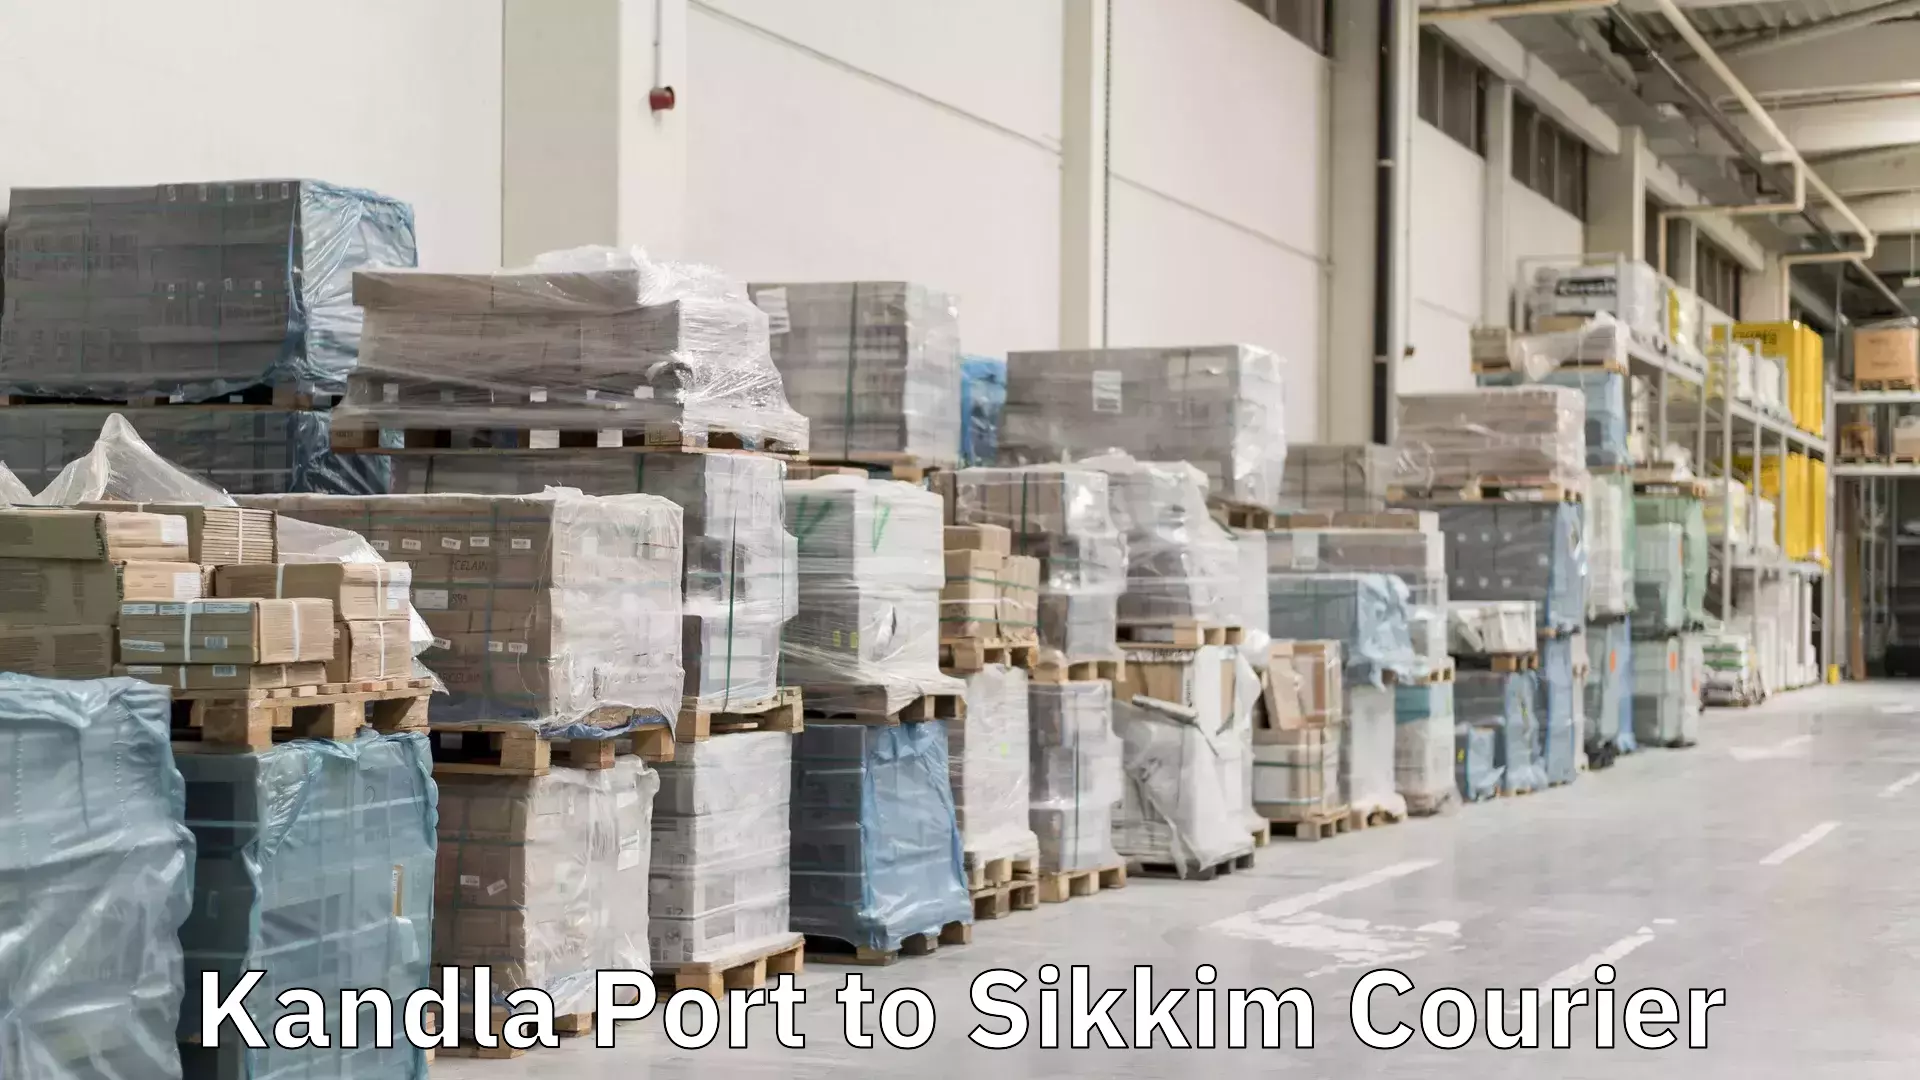 Ground shipping in Kandla Port to Sikkim